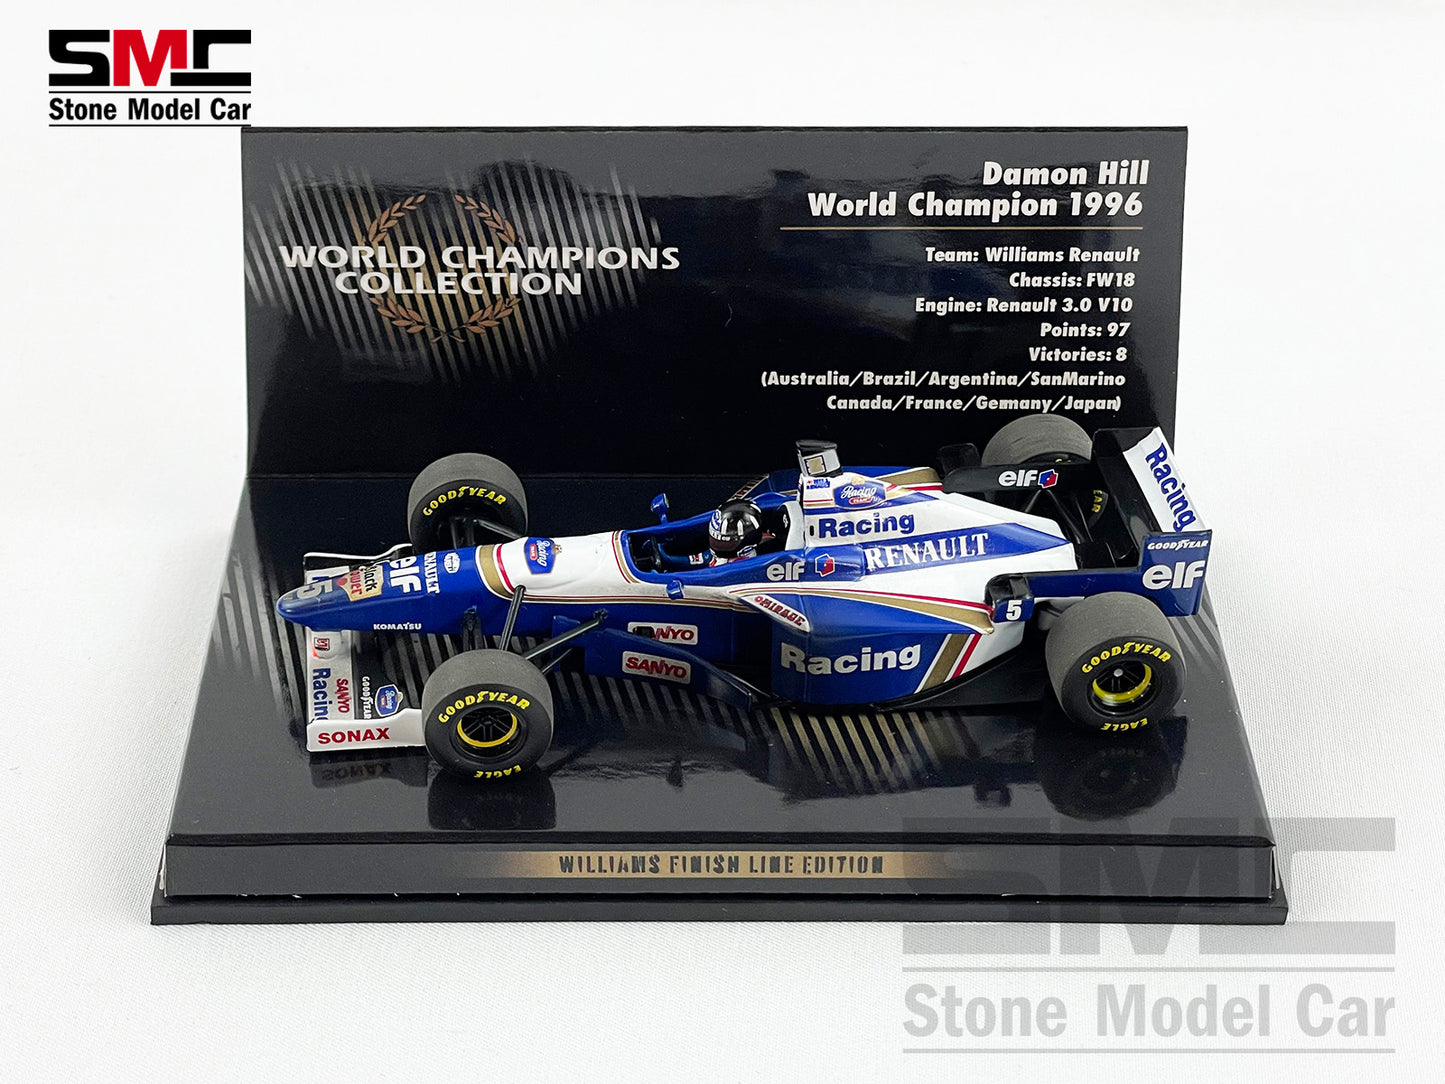 Williams F1 FW18 #5 Damon Hill 1996 World Champion 1:43 MINICHAMPS 436966605